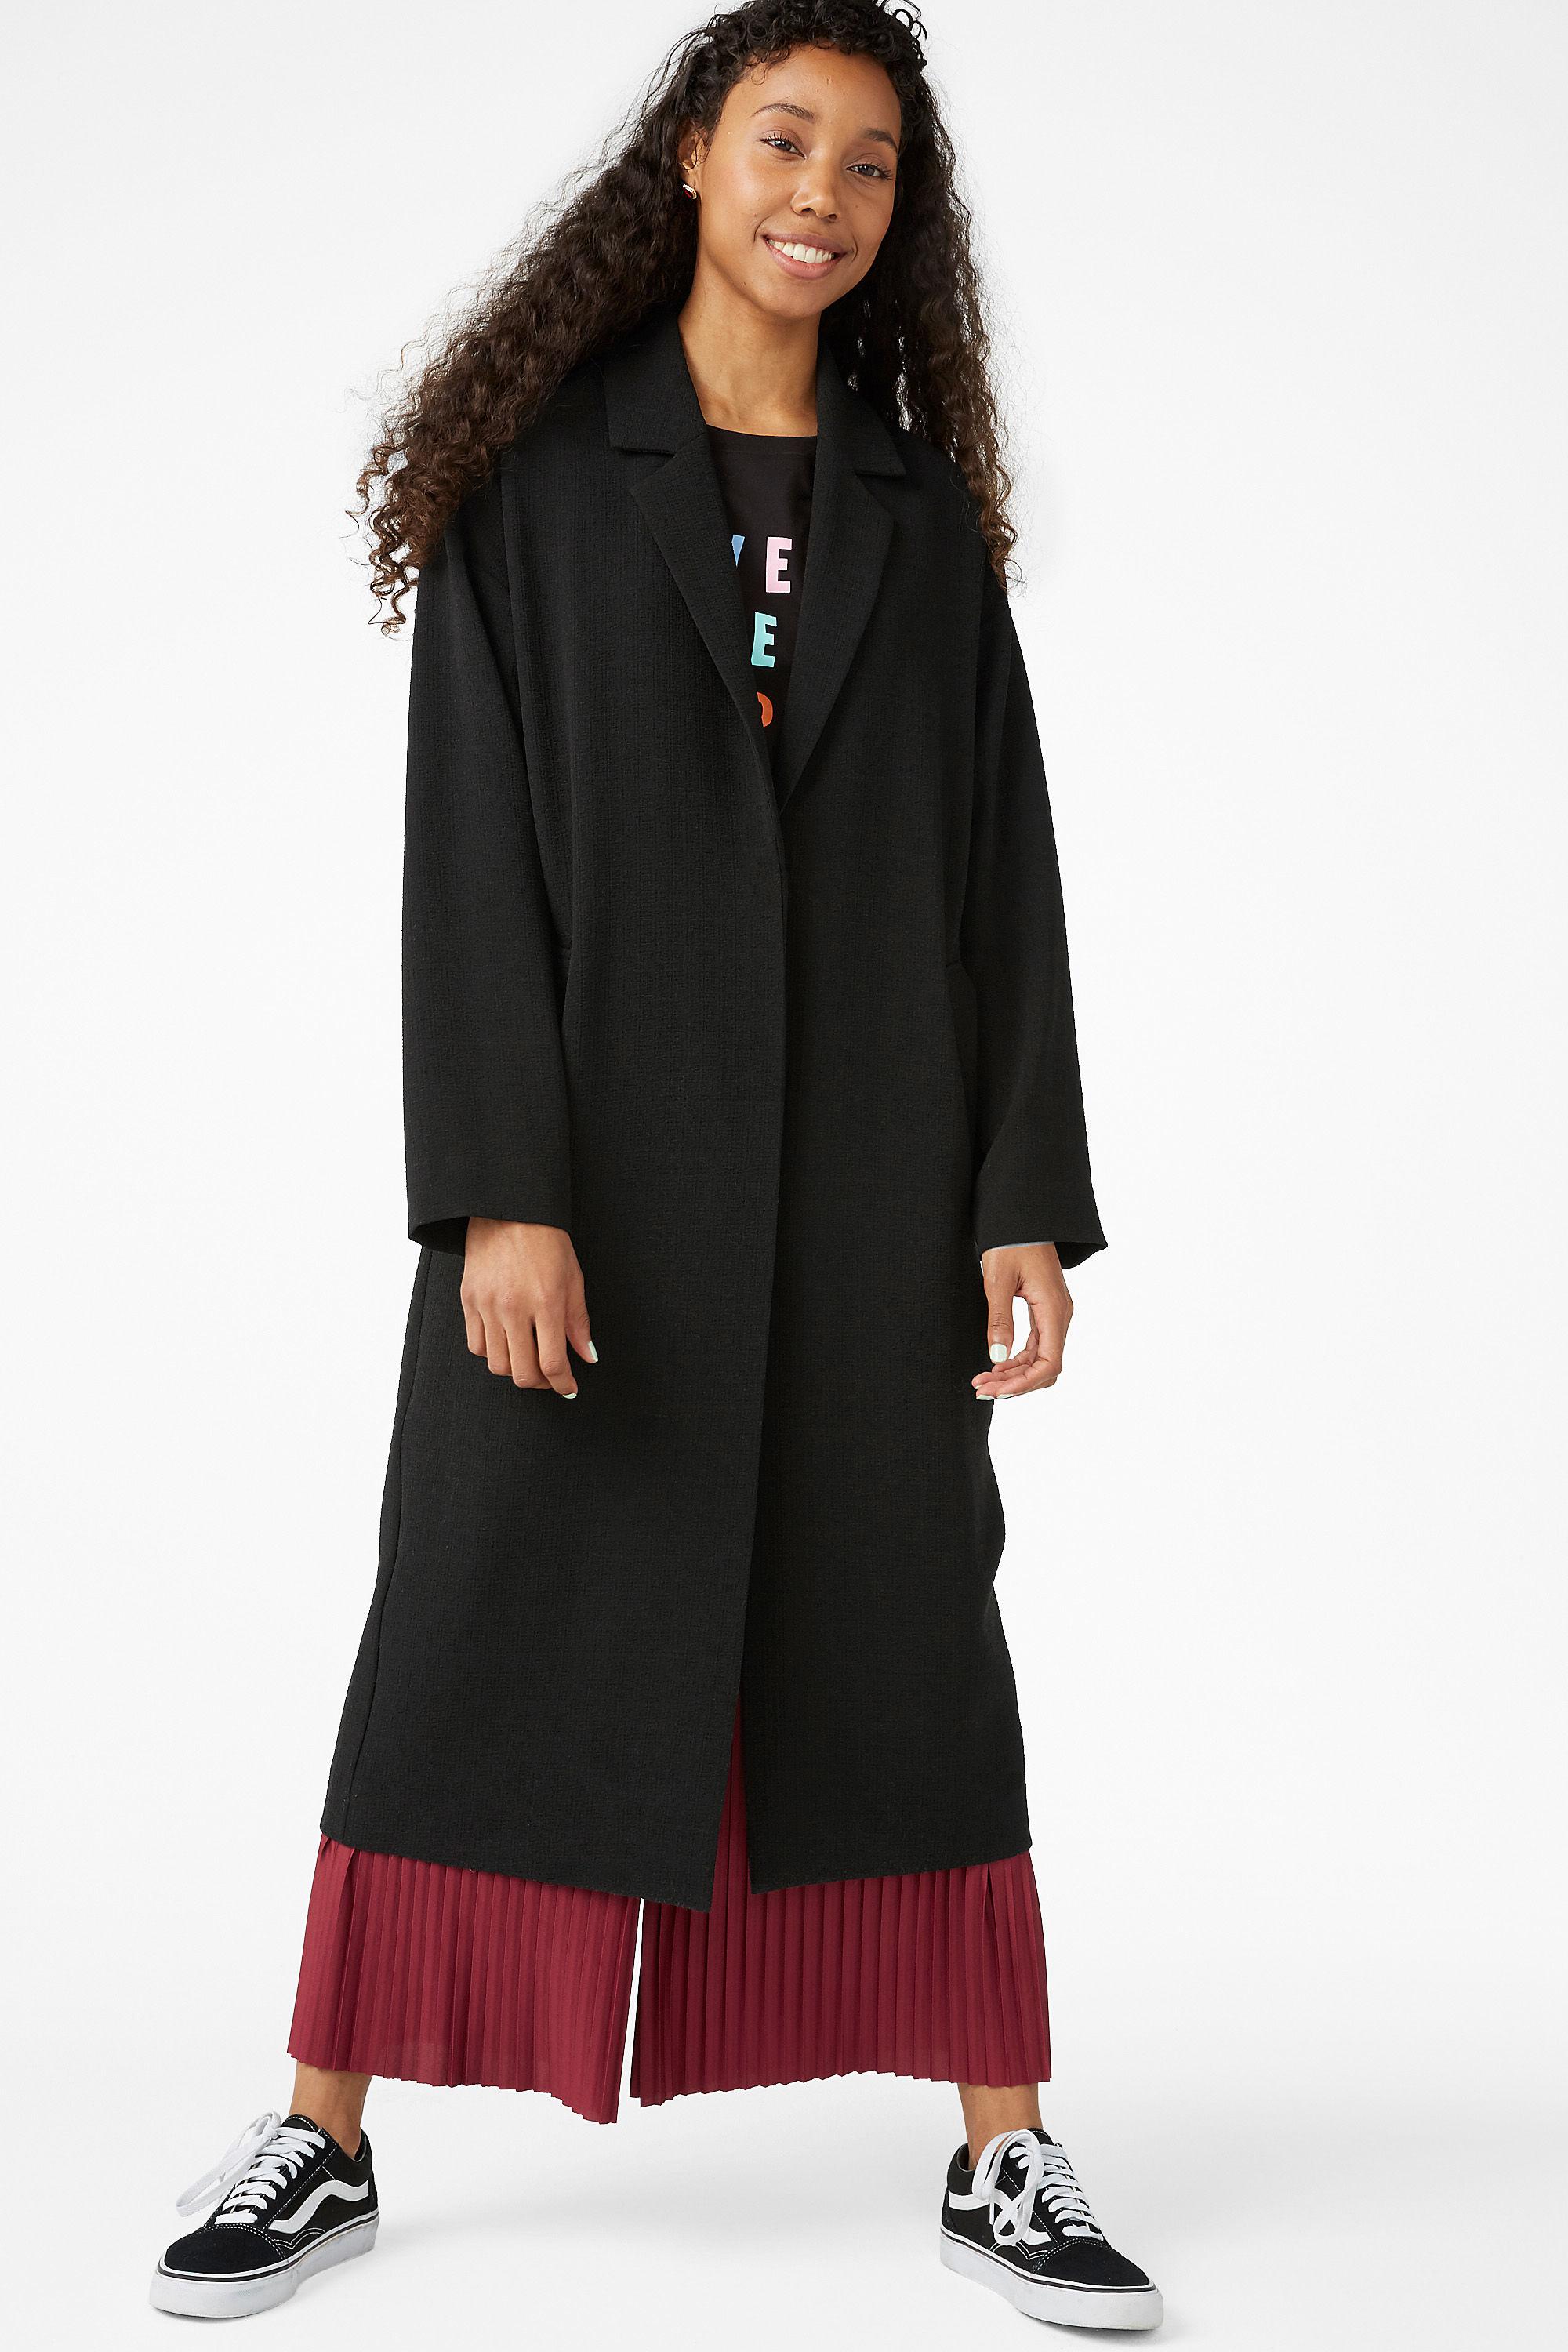 Monki Long Dressy Coat Sale, SAVE 30% -